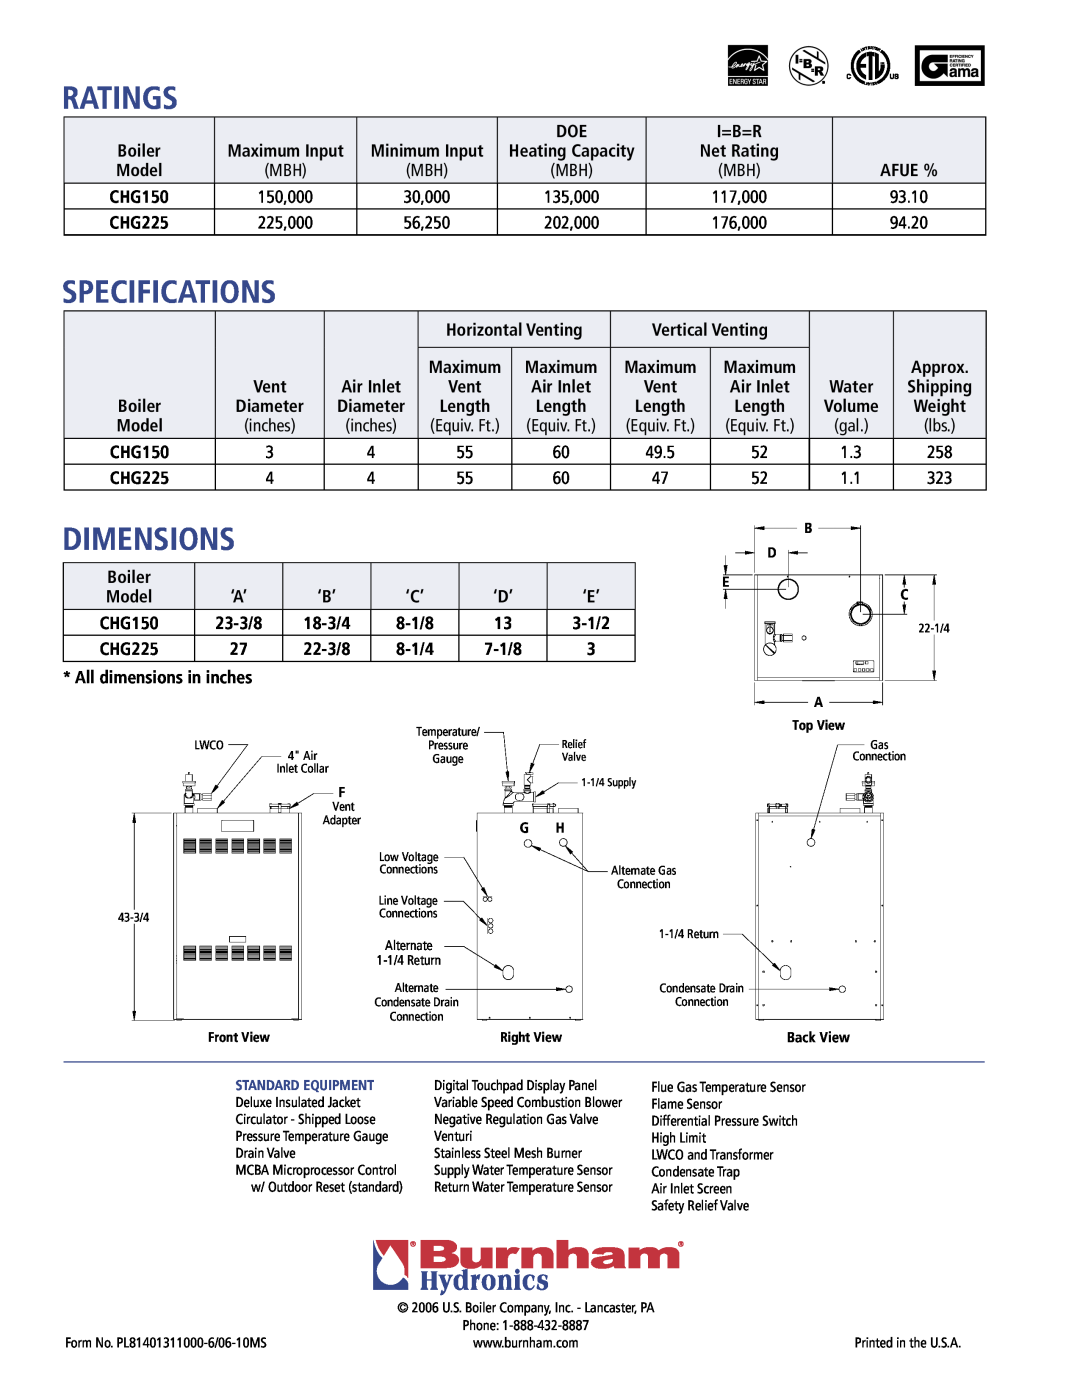 Burnham `A' `B' `C' `D' `E manual Ratings, Dimensions, Specifications 